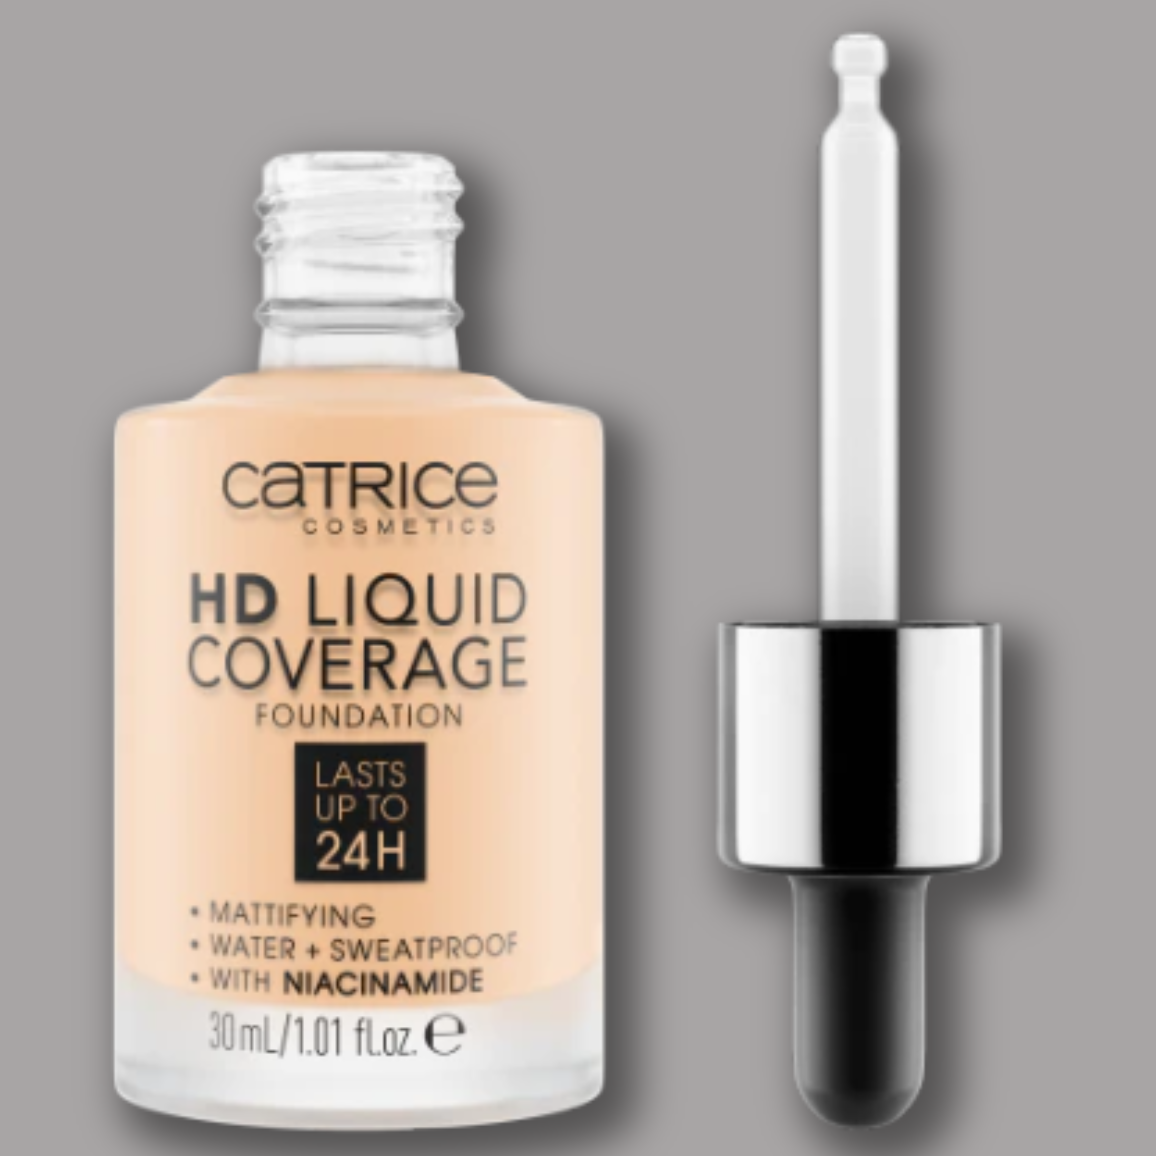 Catrice HD Liquid Coverage Foundation